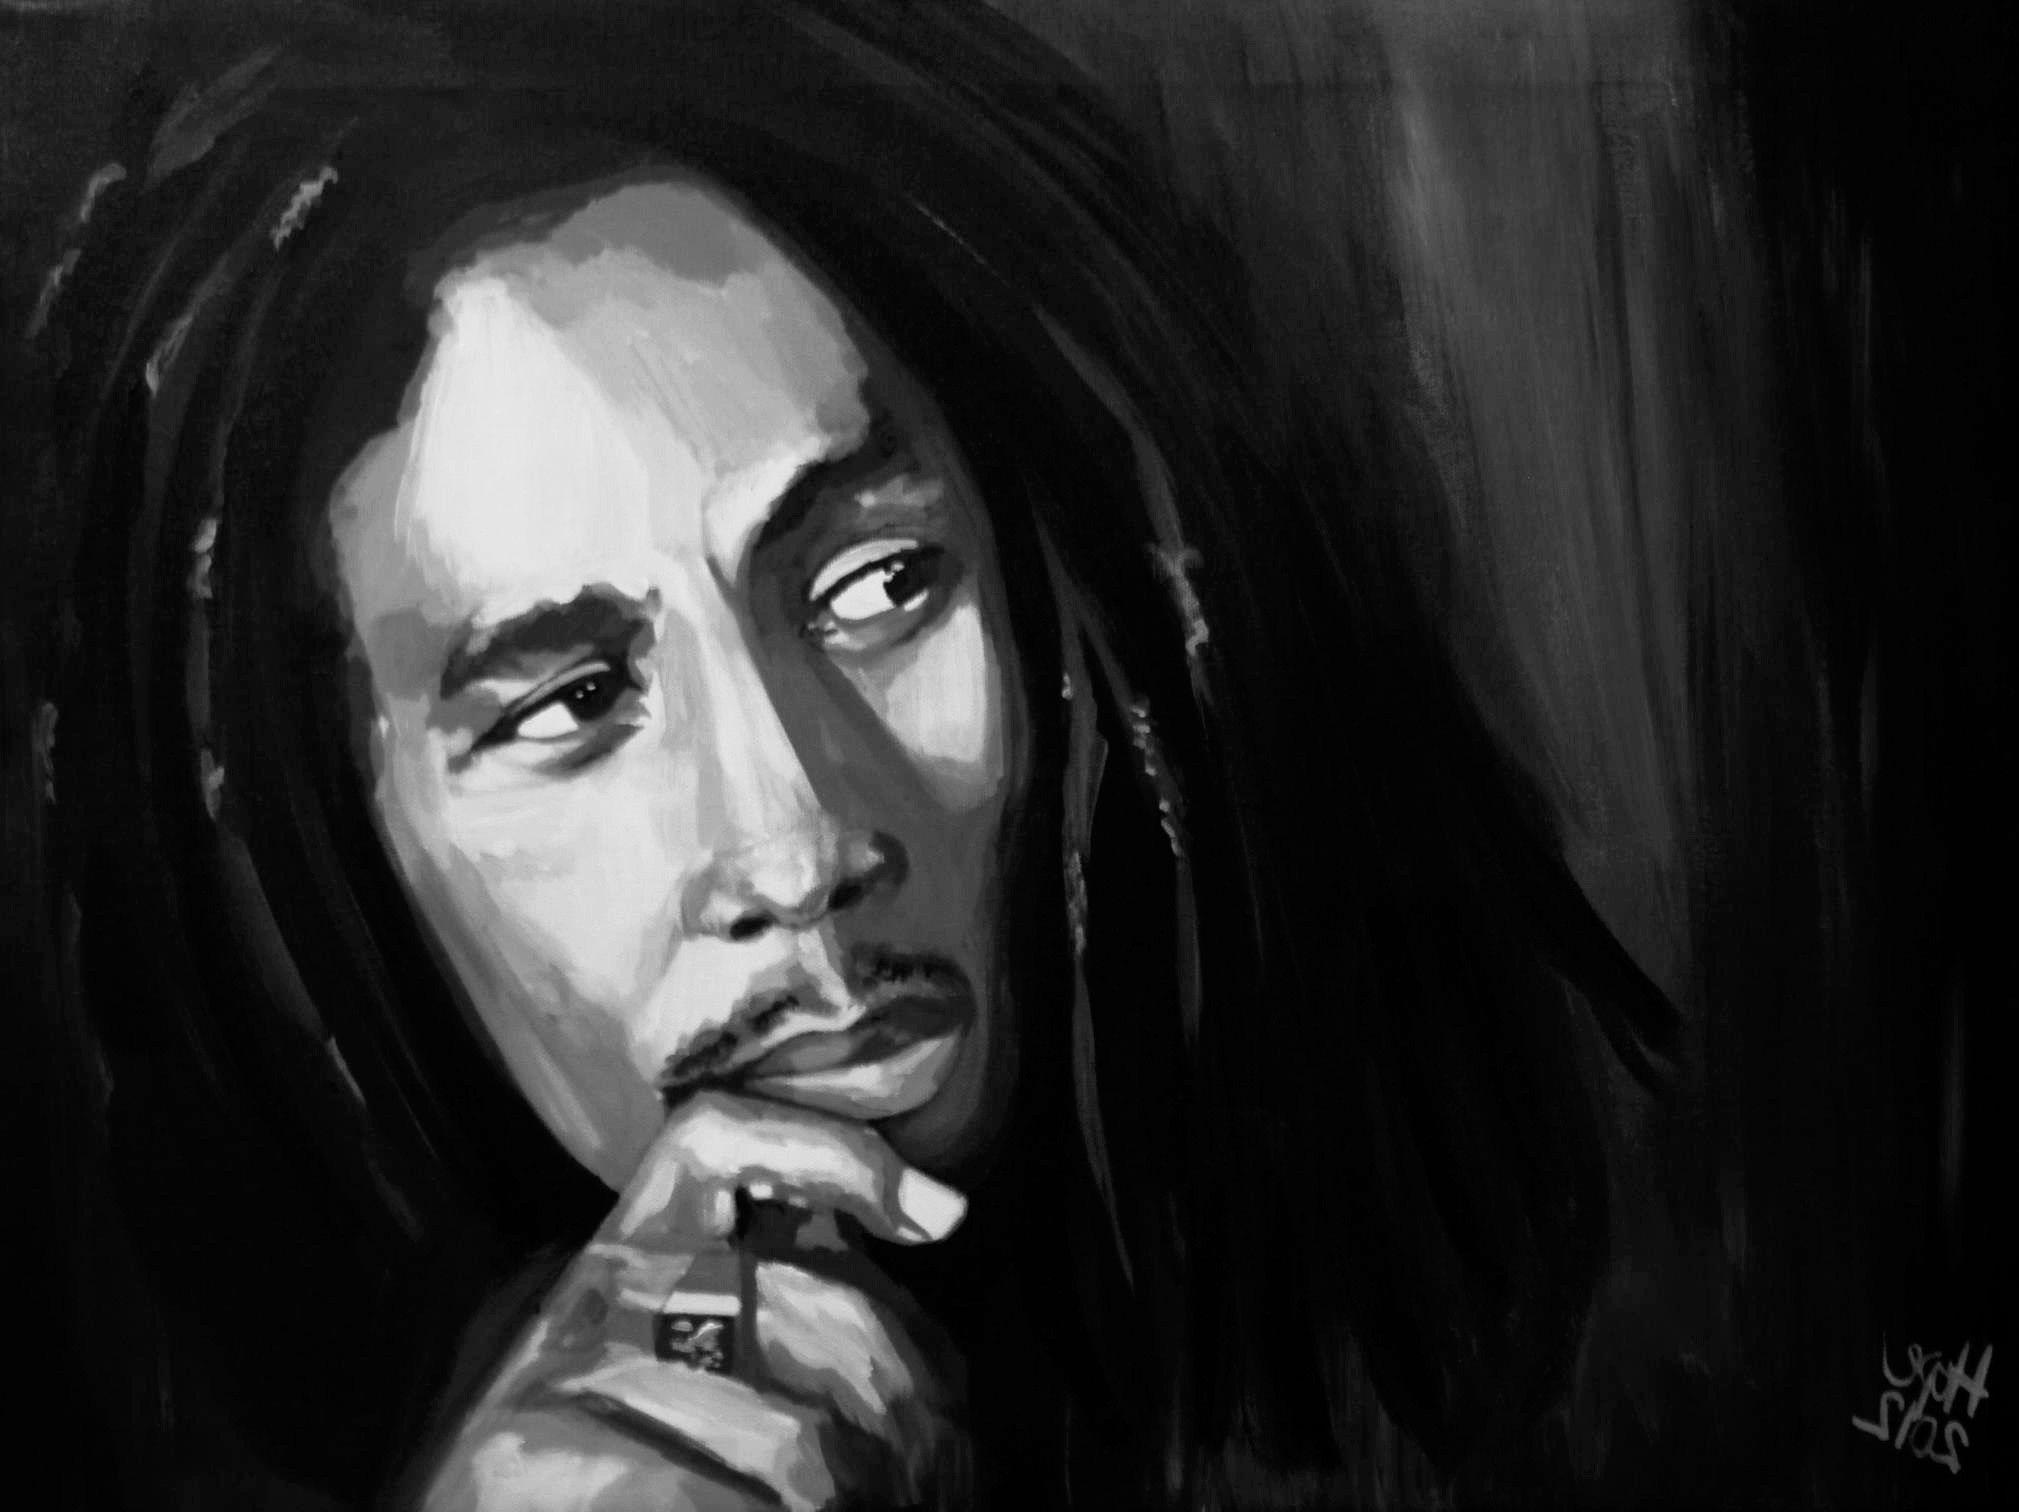 Bob Marley Wallpapers - Wallpaper Cave